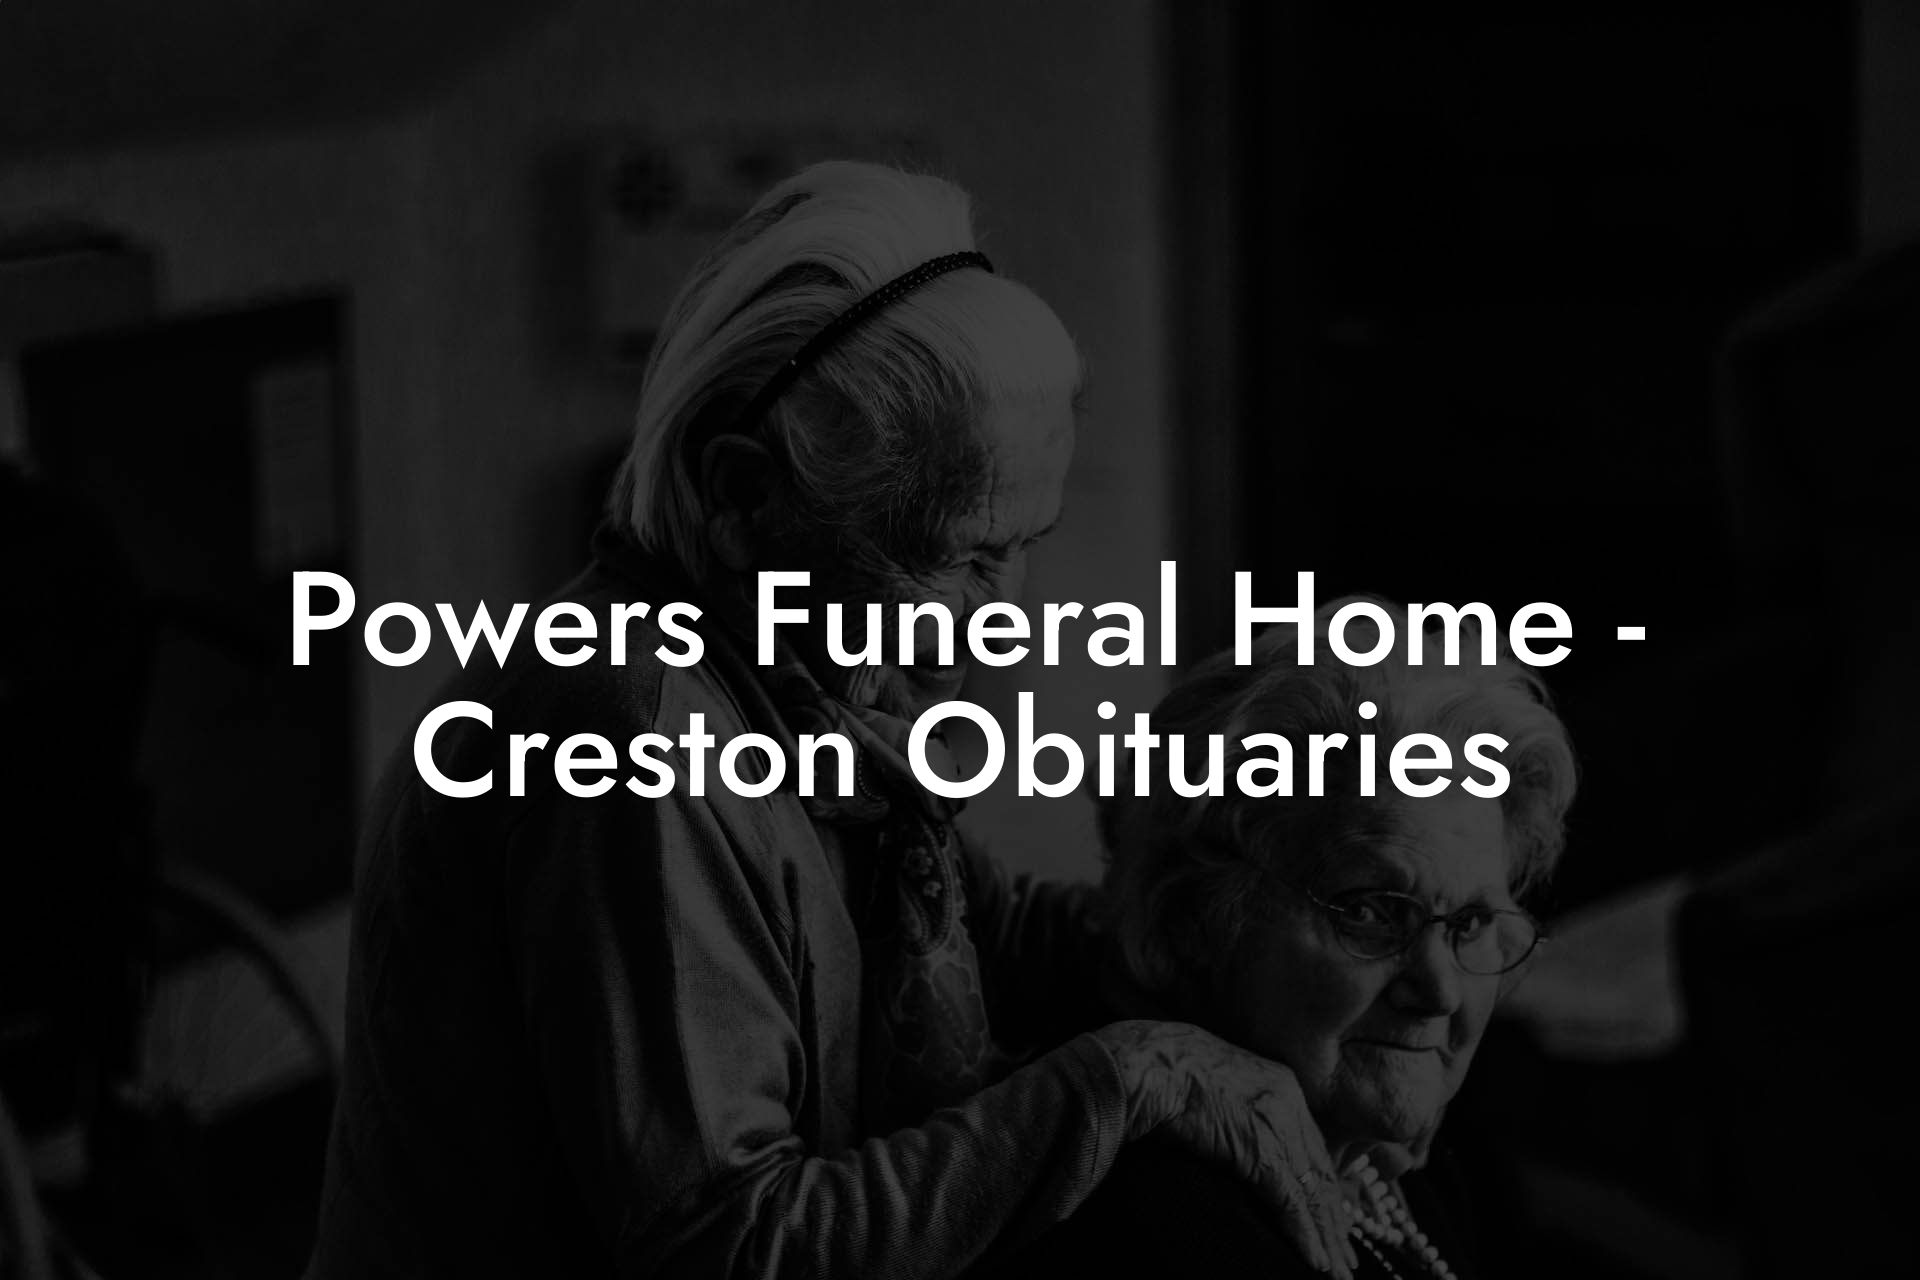 Powers Funeral Home - Creston Obituaries